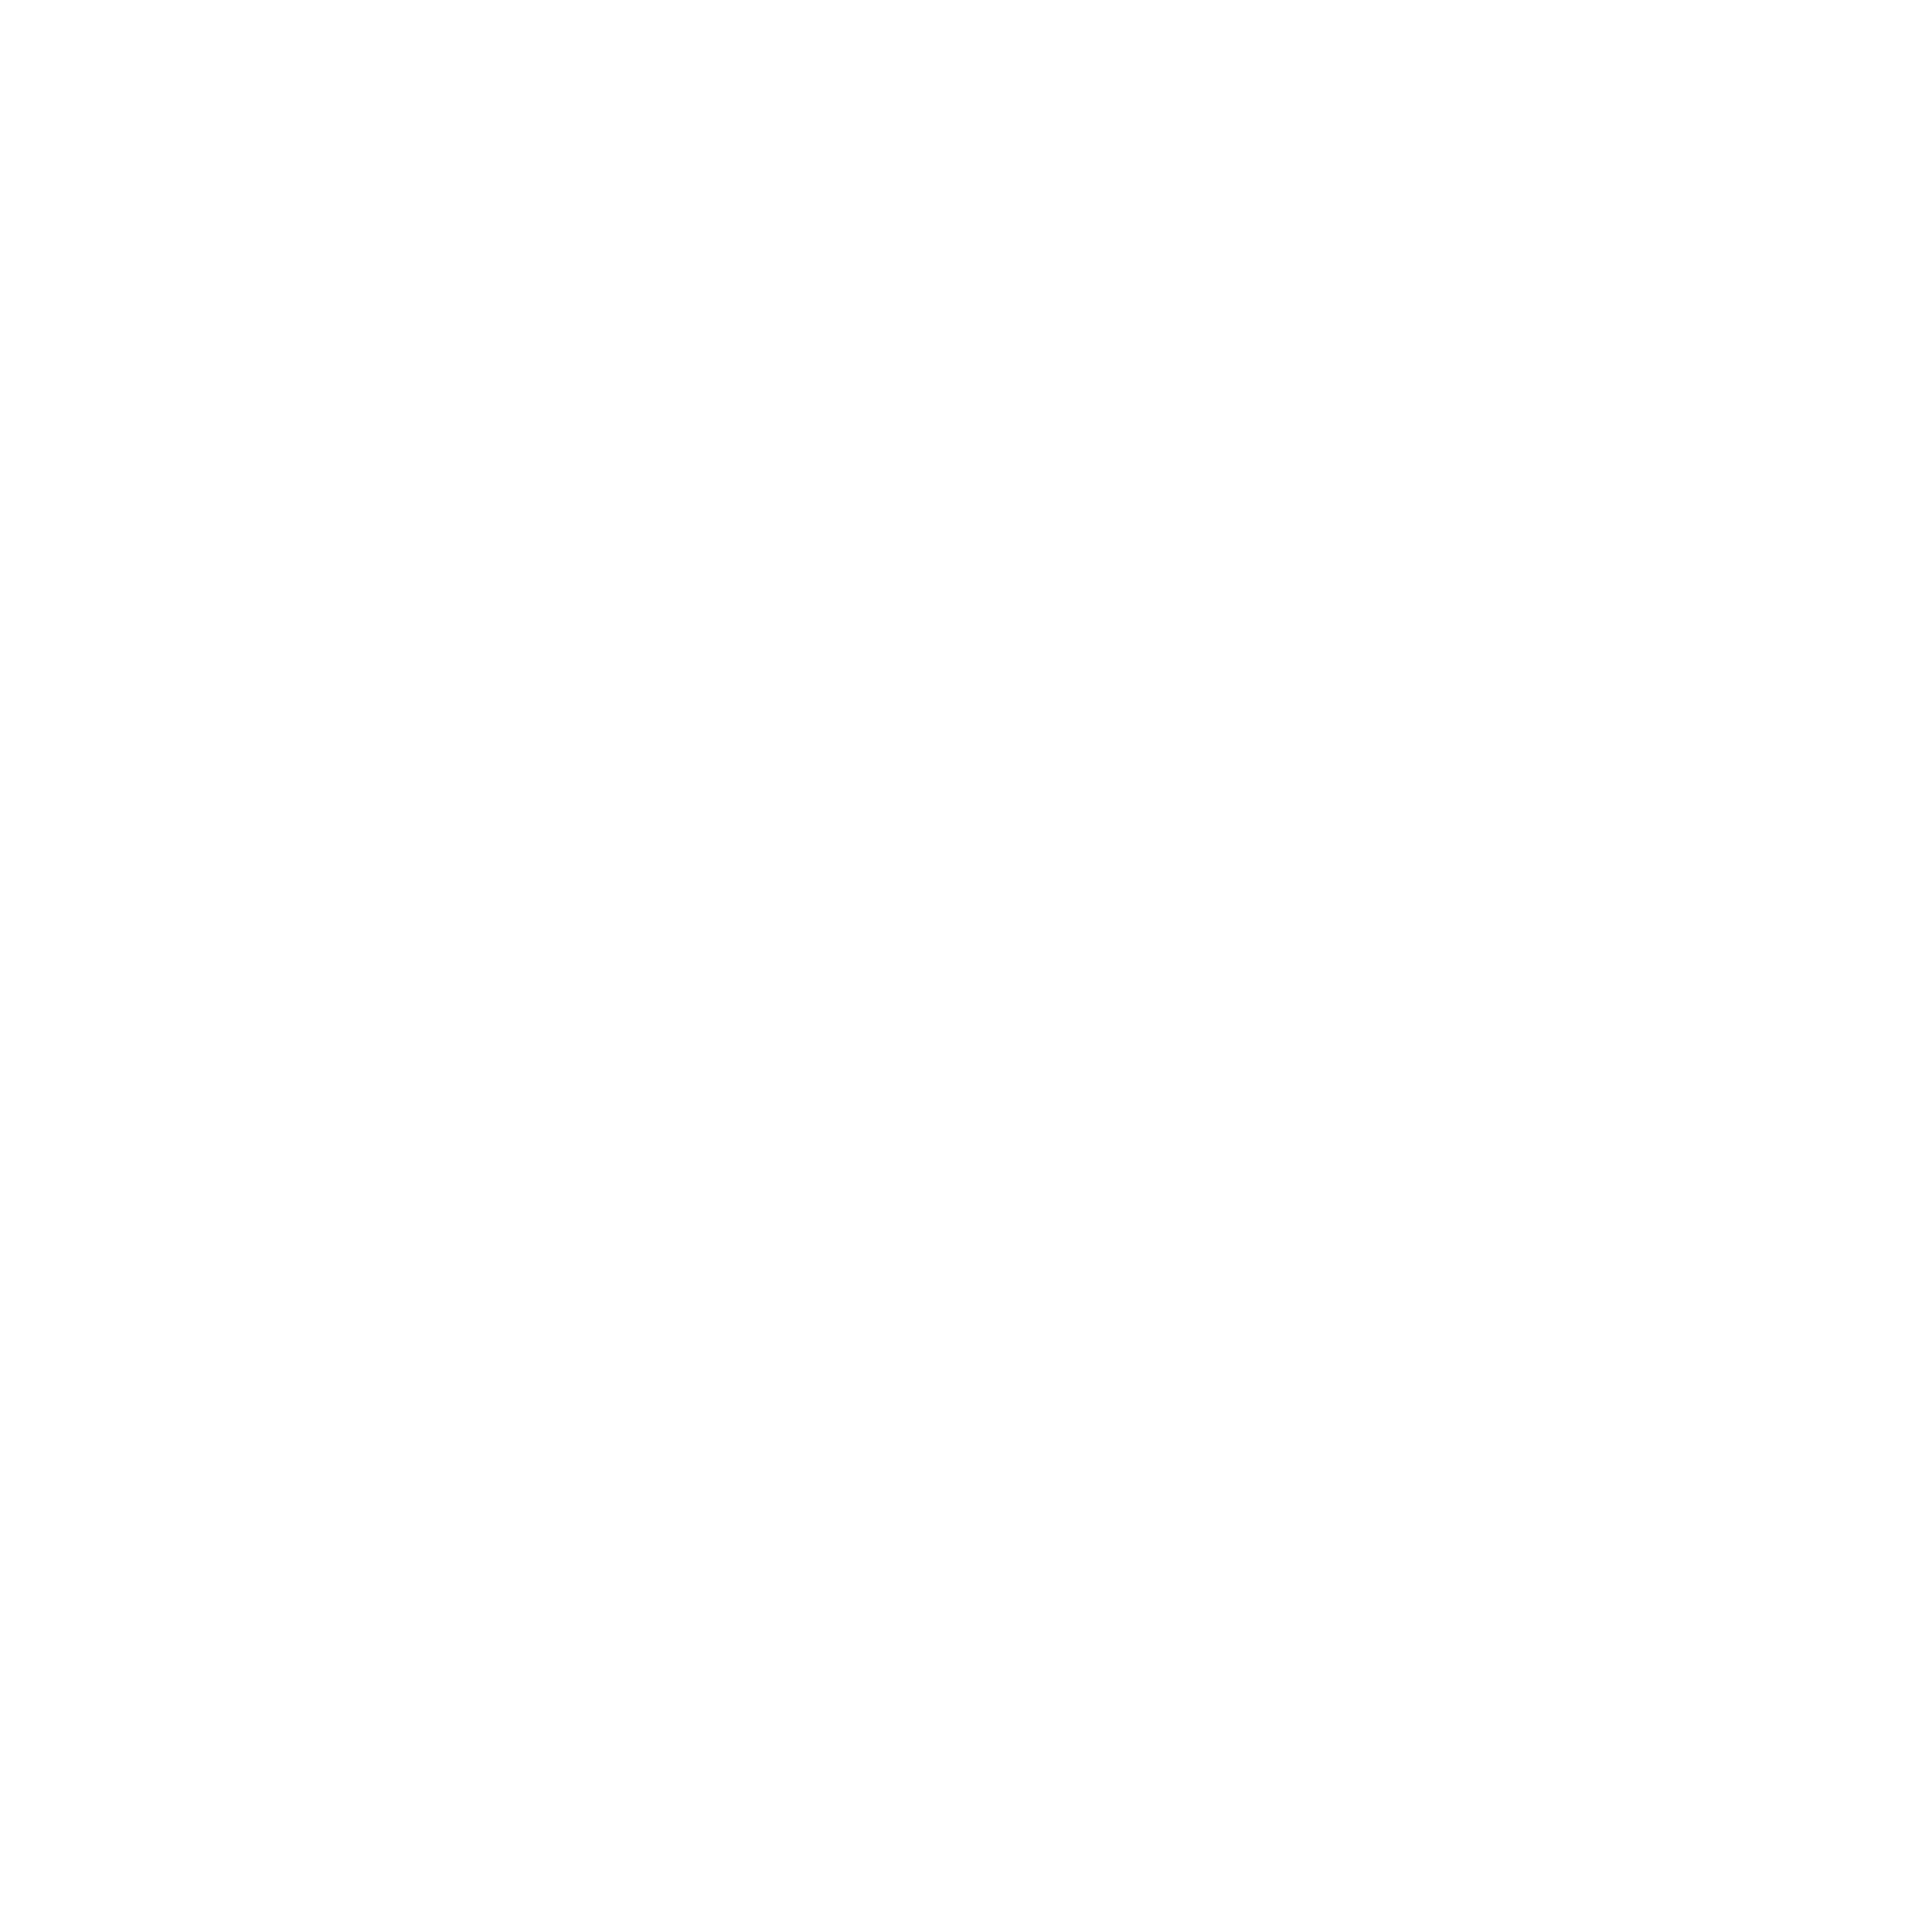 Zebra Golf Logo - Zebra by RAM Golf Logo PNG Transparent & SVG Vector - Freebie Supply